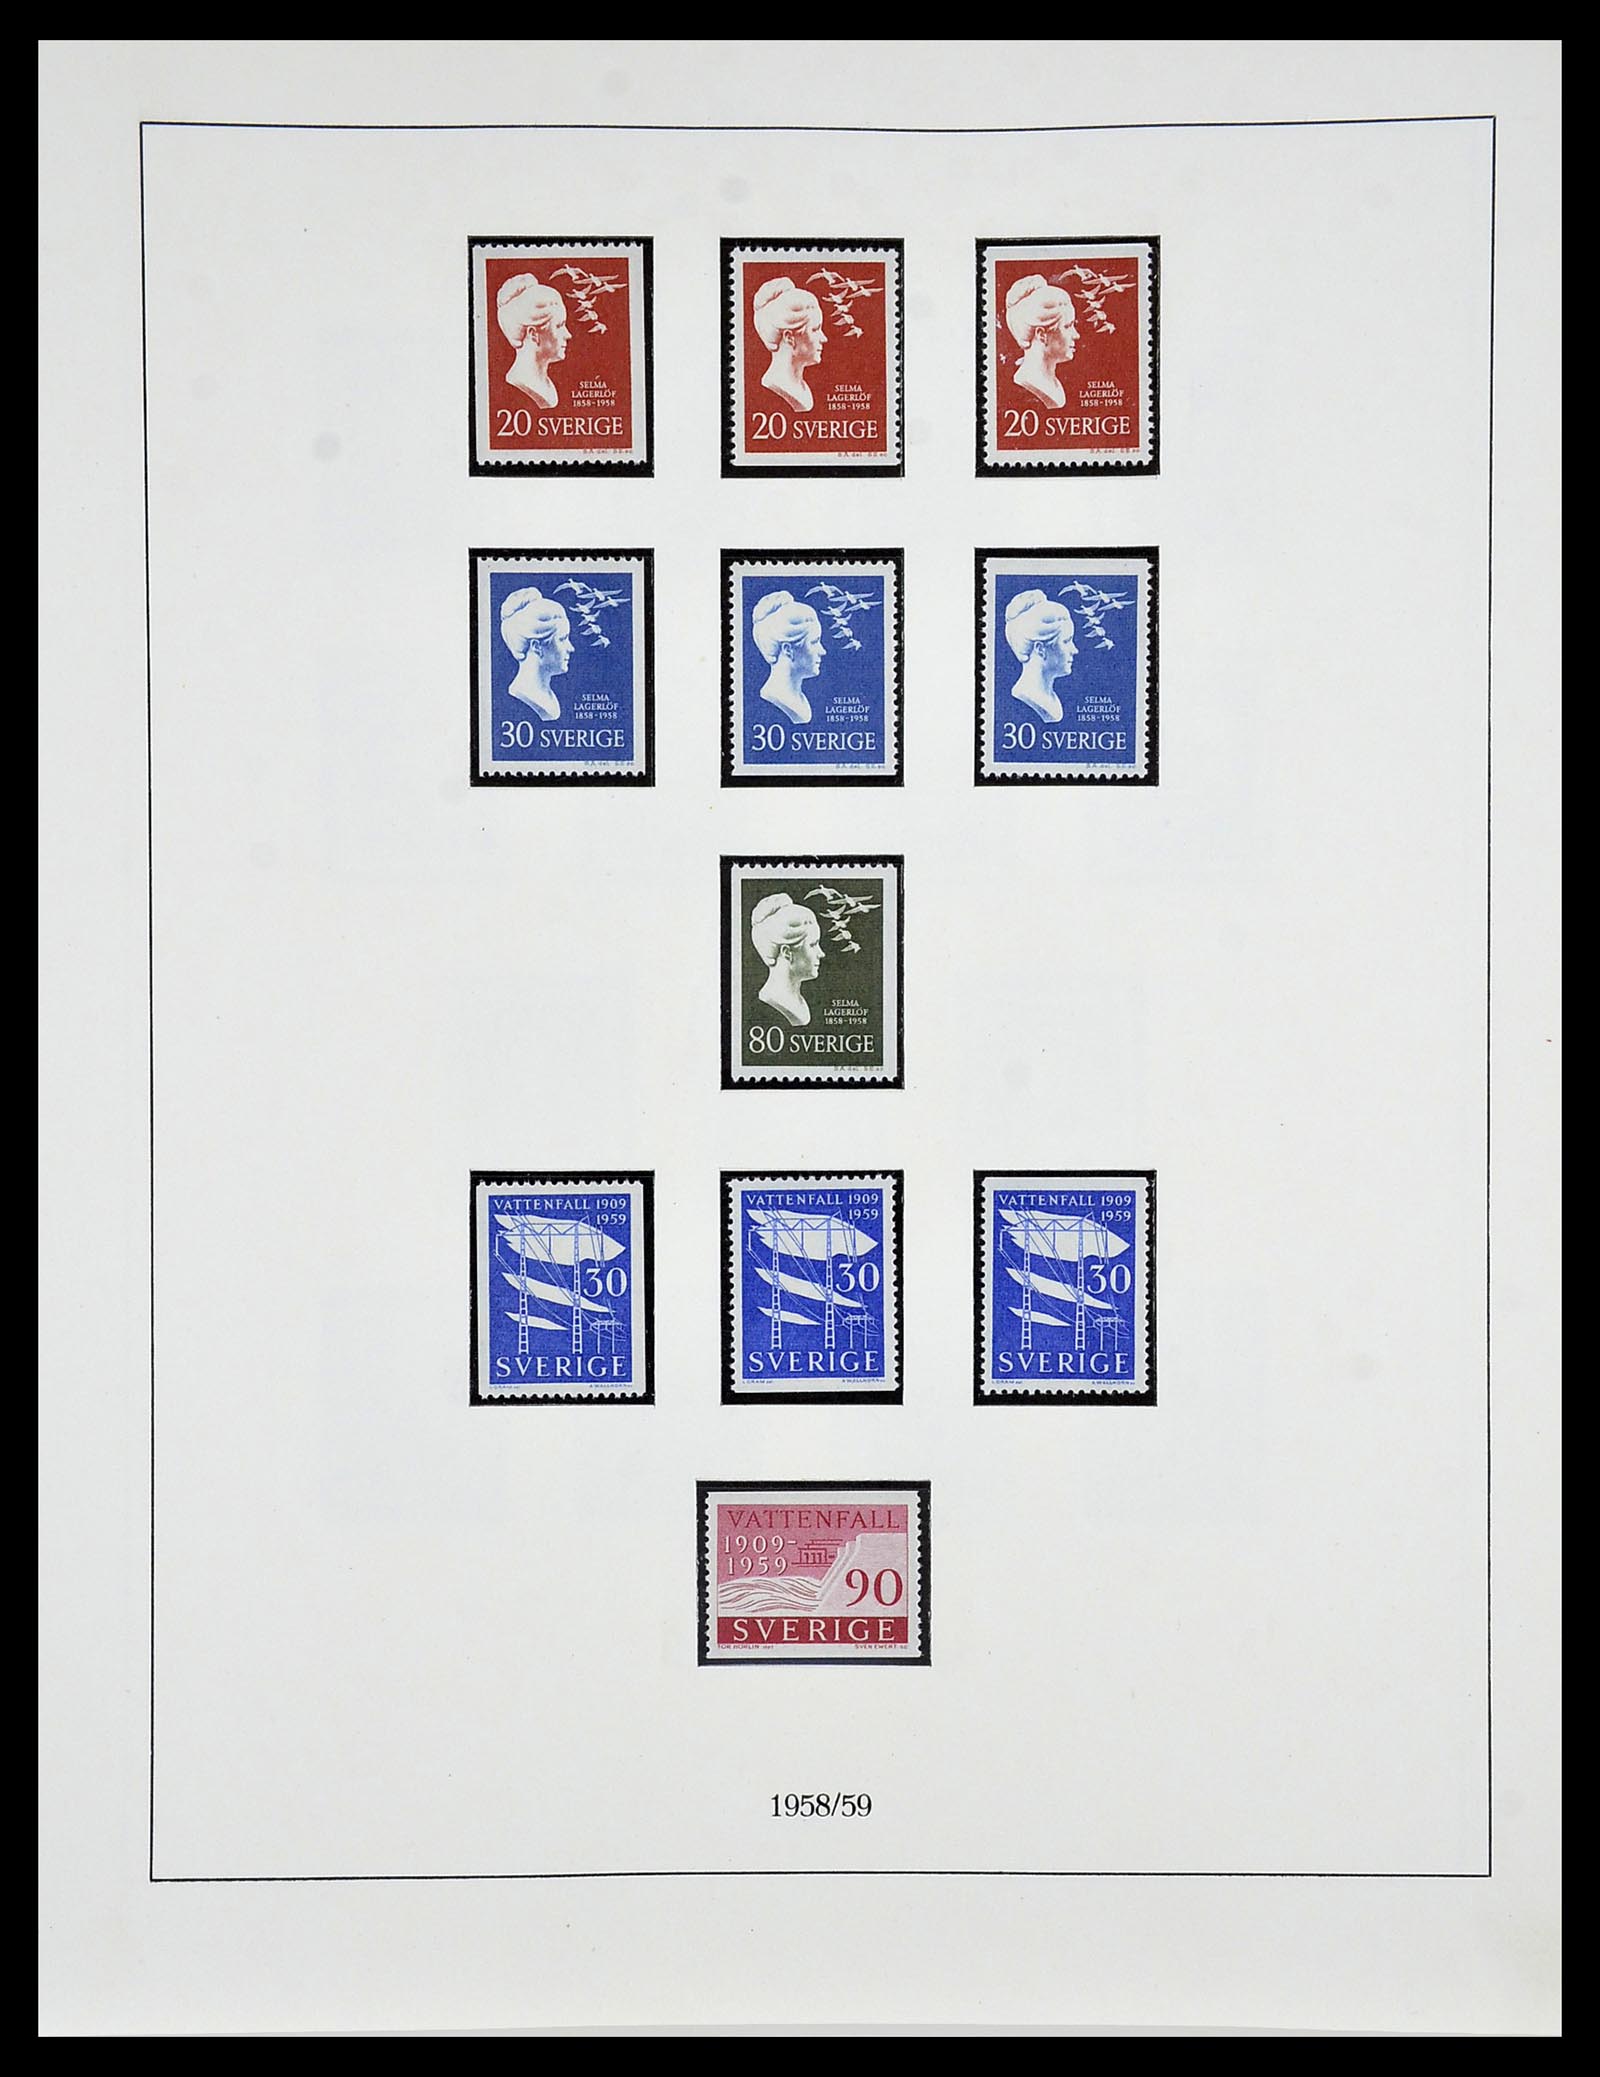 34313 094 - Stamp collection 34313 Scandinavia 1856-1990.